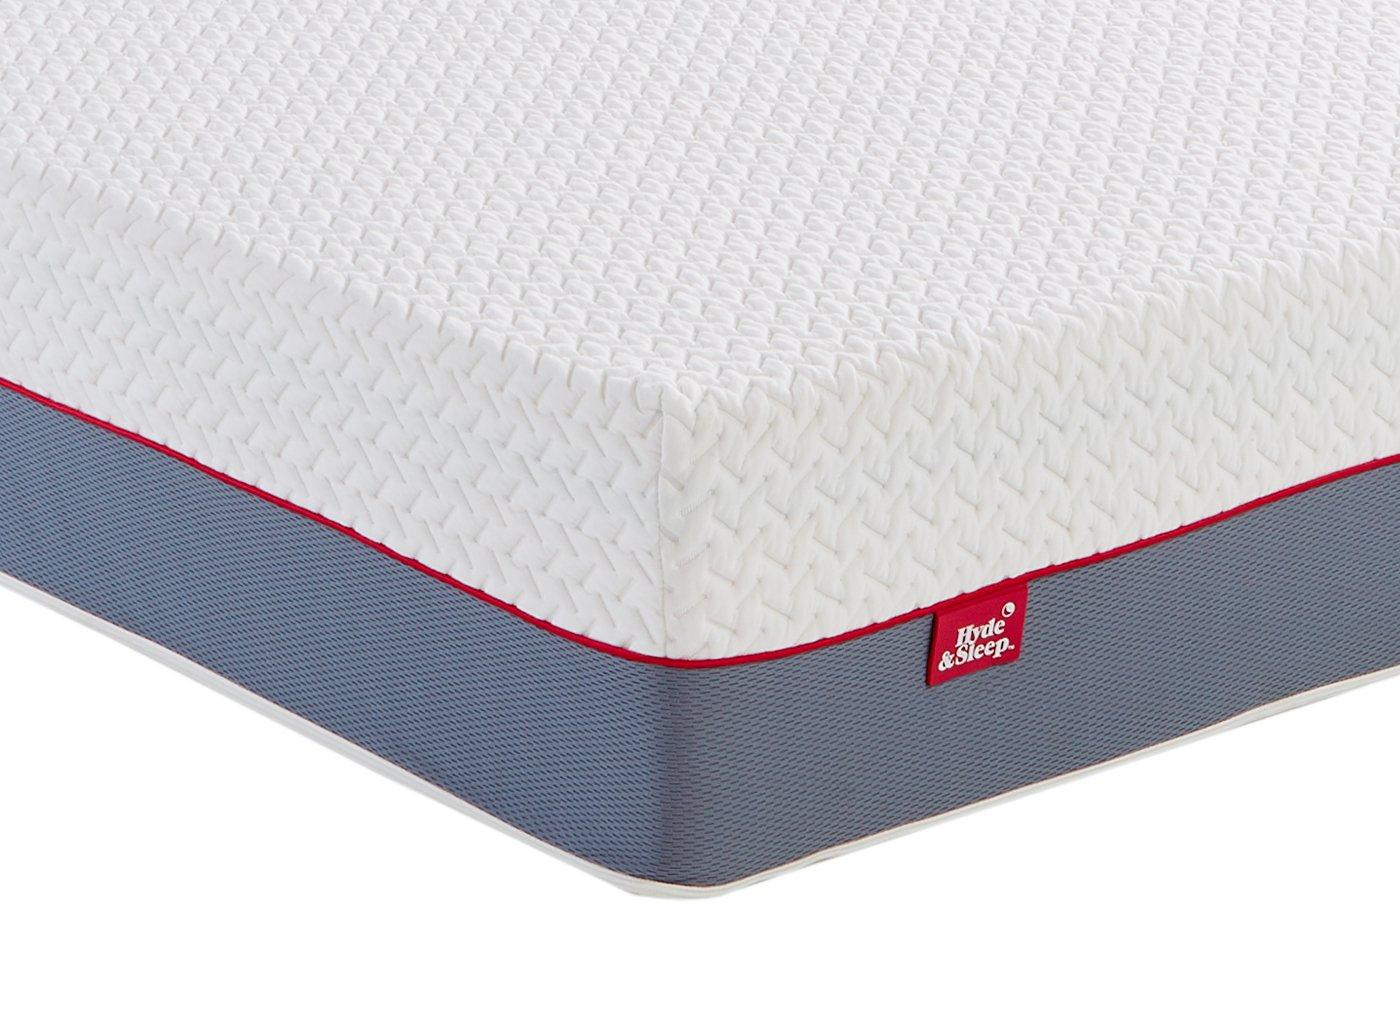 hyde and sleep mattress king size